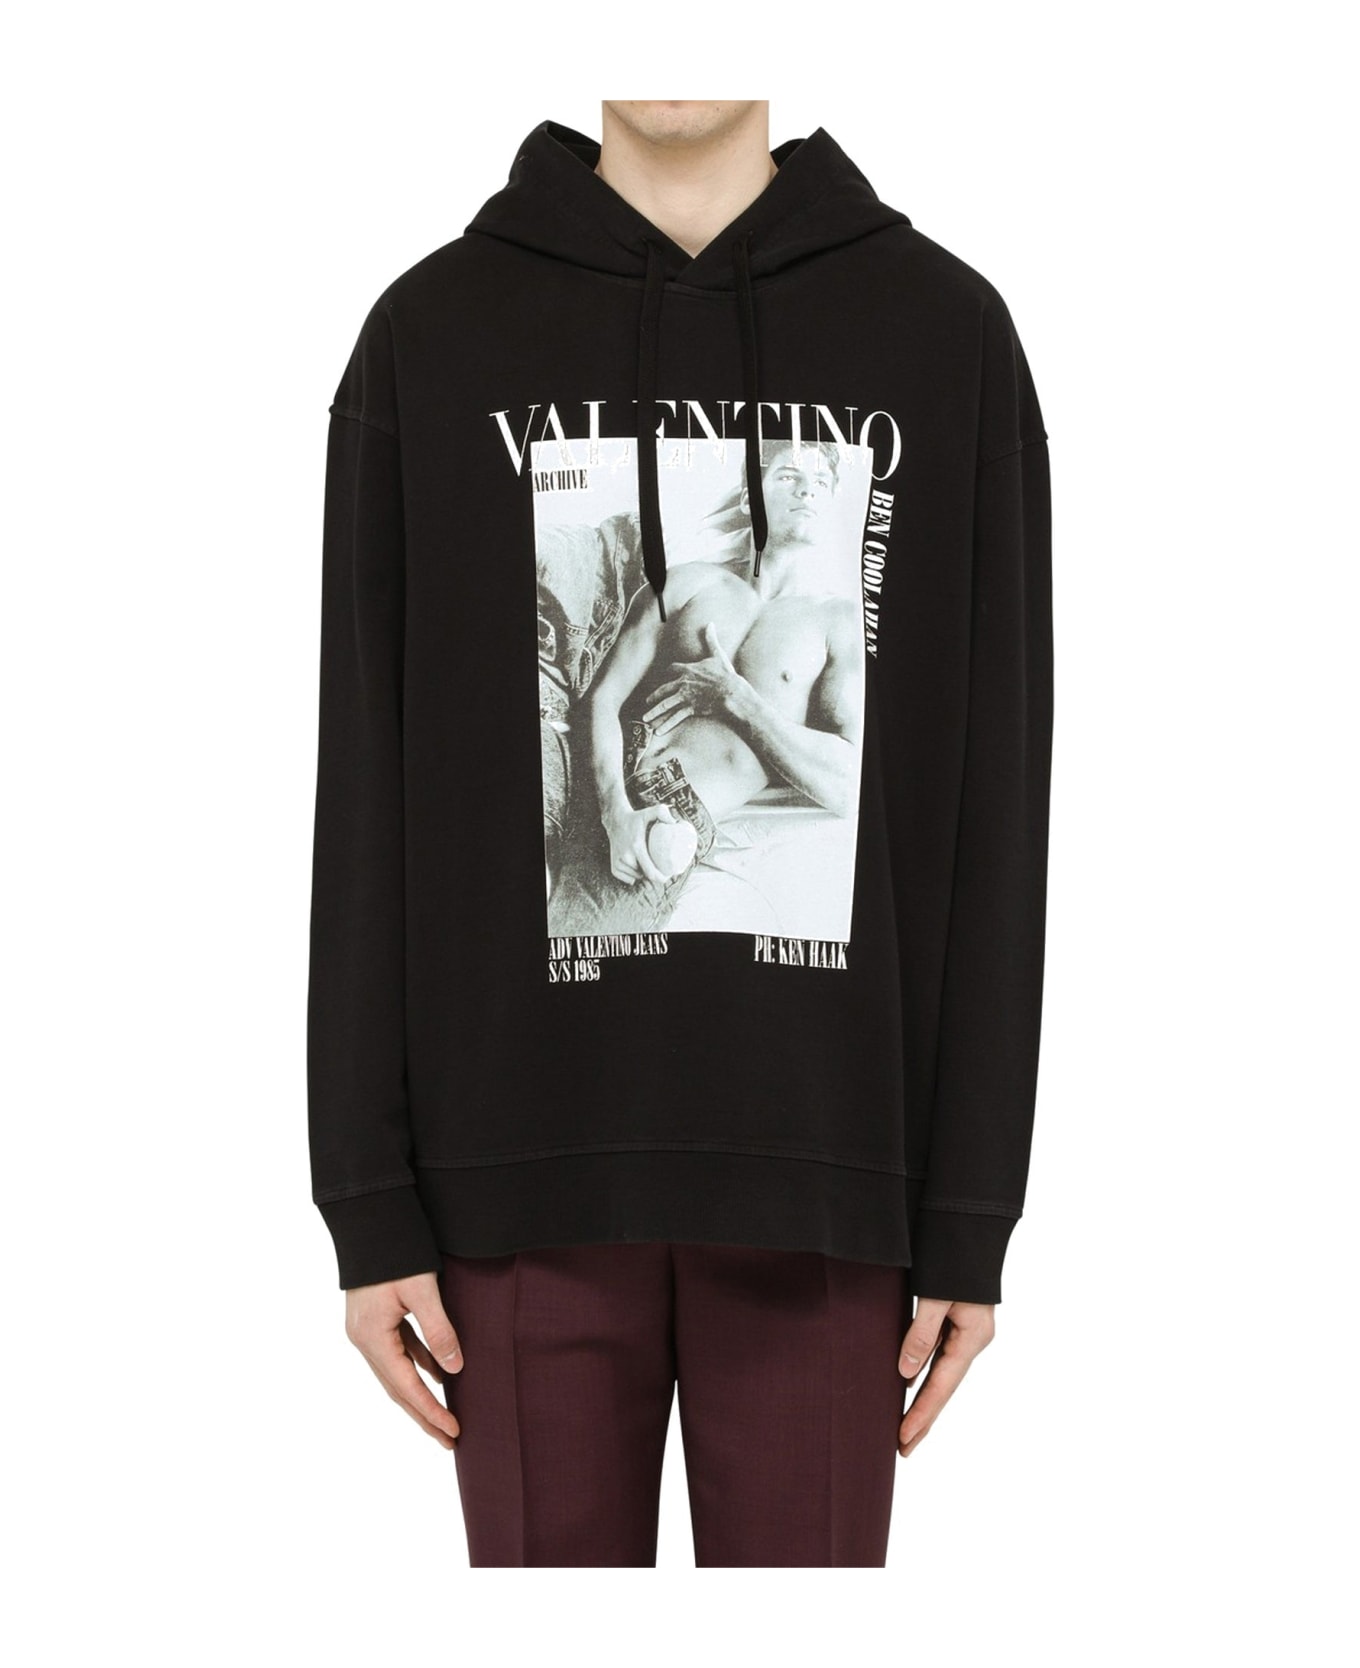 Valentino Graphic Printed Sweatshirt - Black